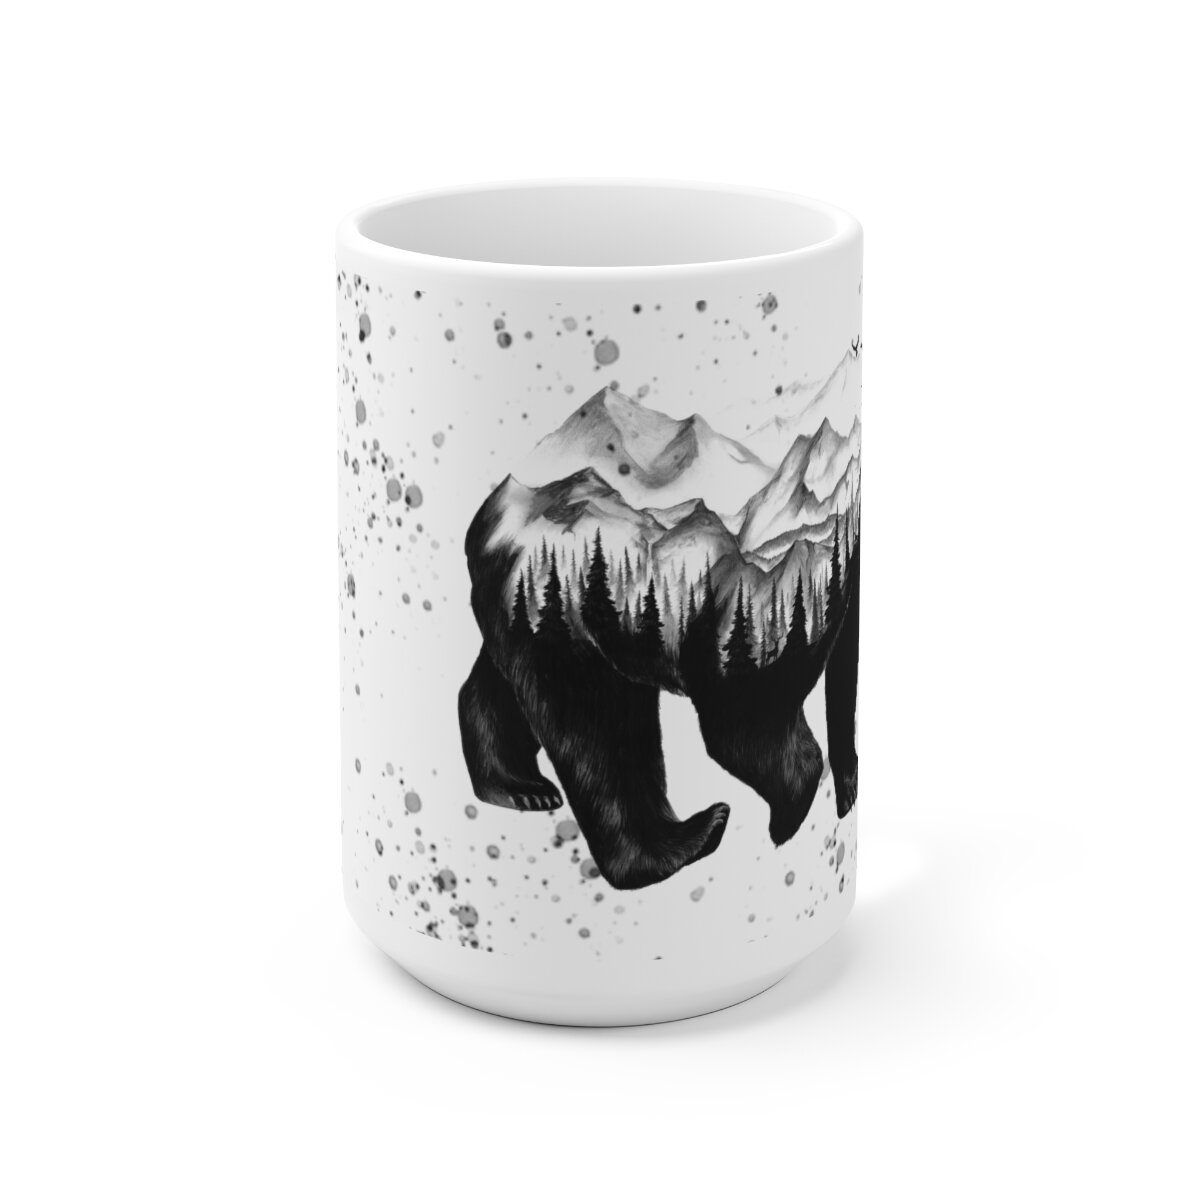 Mama Bear 15oz Coffee Mug Tumbler – Piper Lou Collection